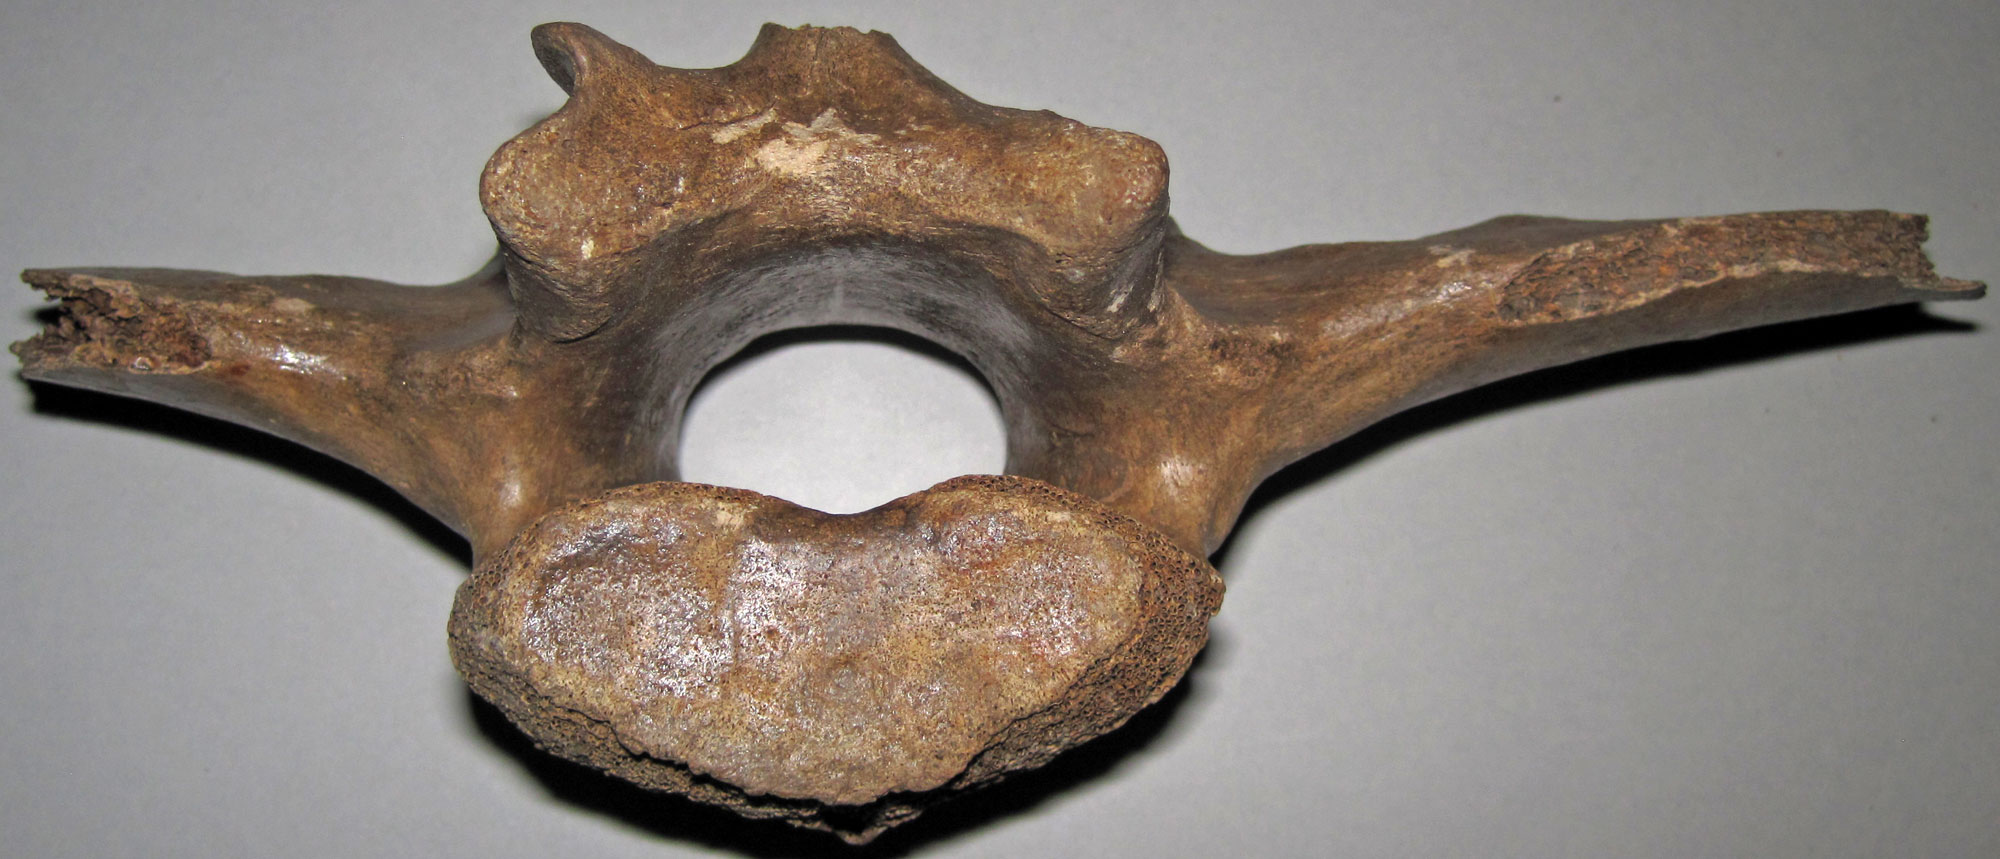 Photograph of a vertebra of a Pleistocene bison.